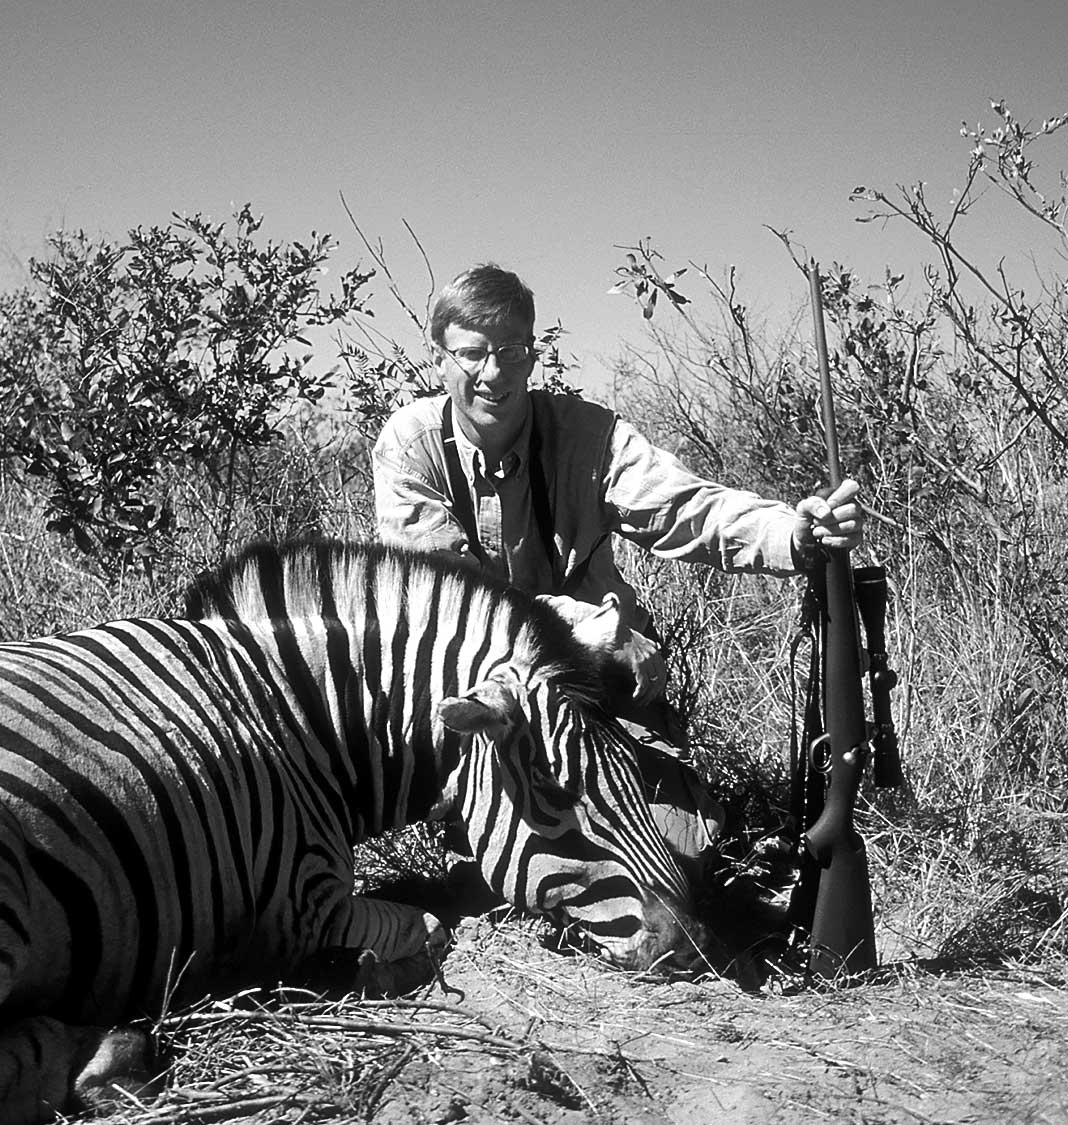 man hunter outdoors rifle zebra hunting animals africa safari